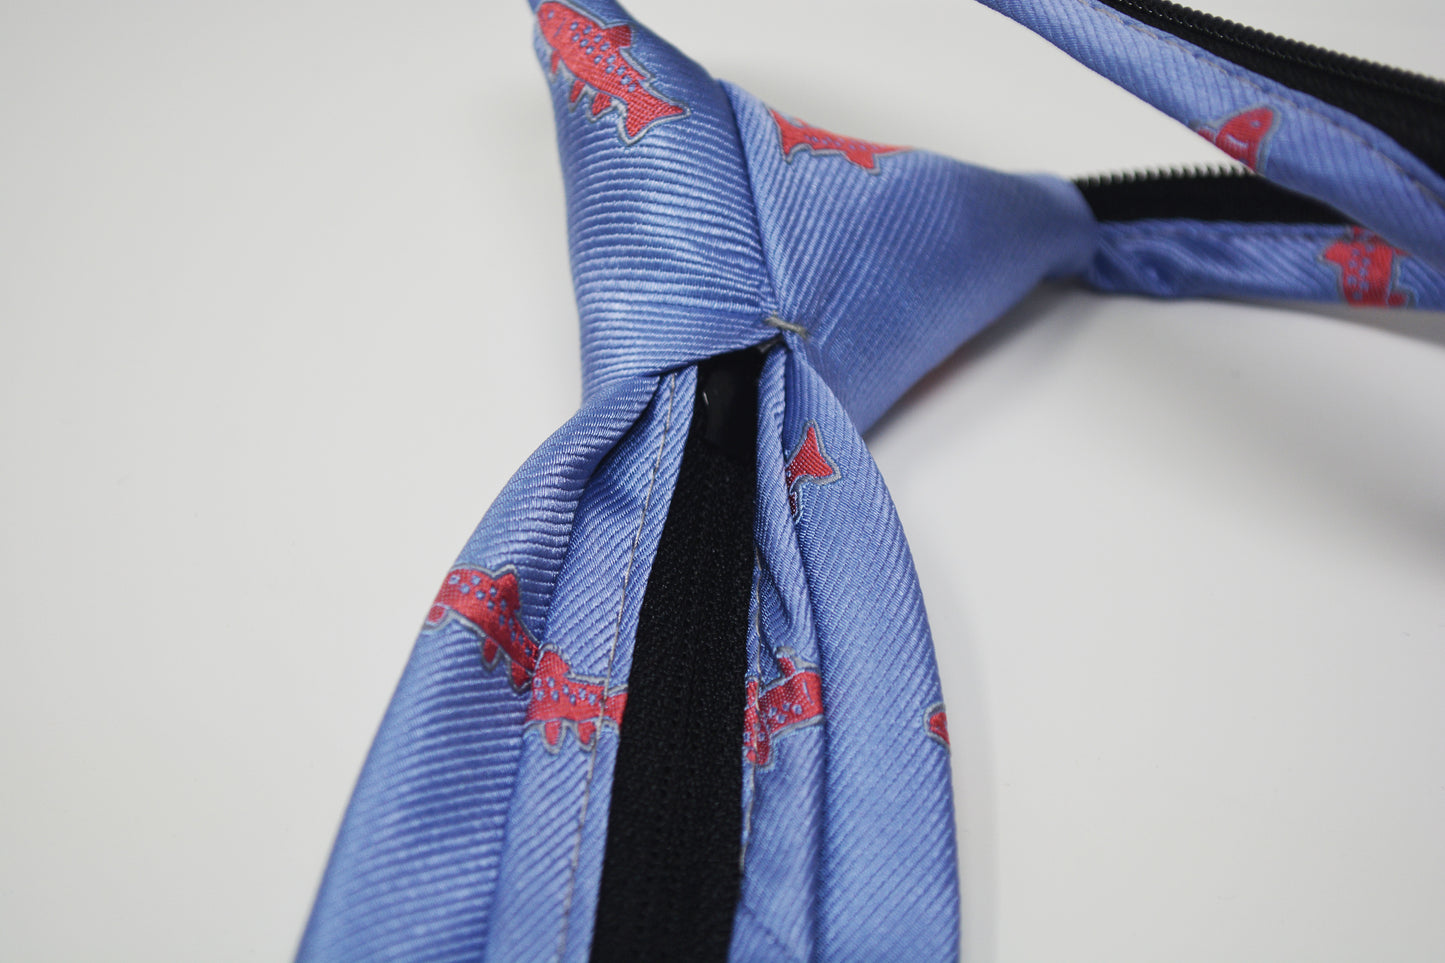 Trout Necktie - Light Blue, Woven Silk